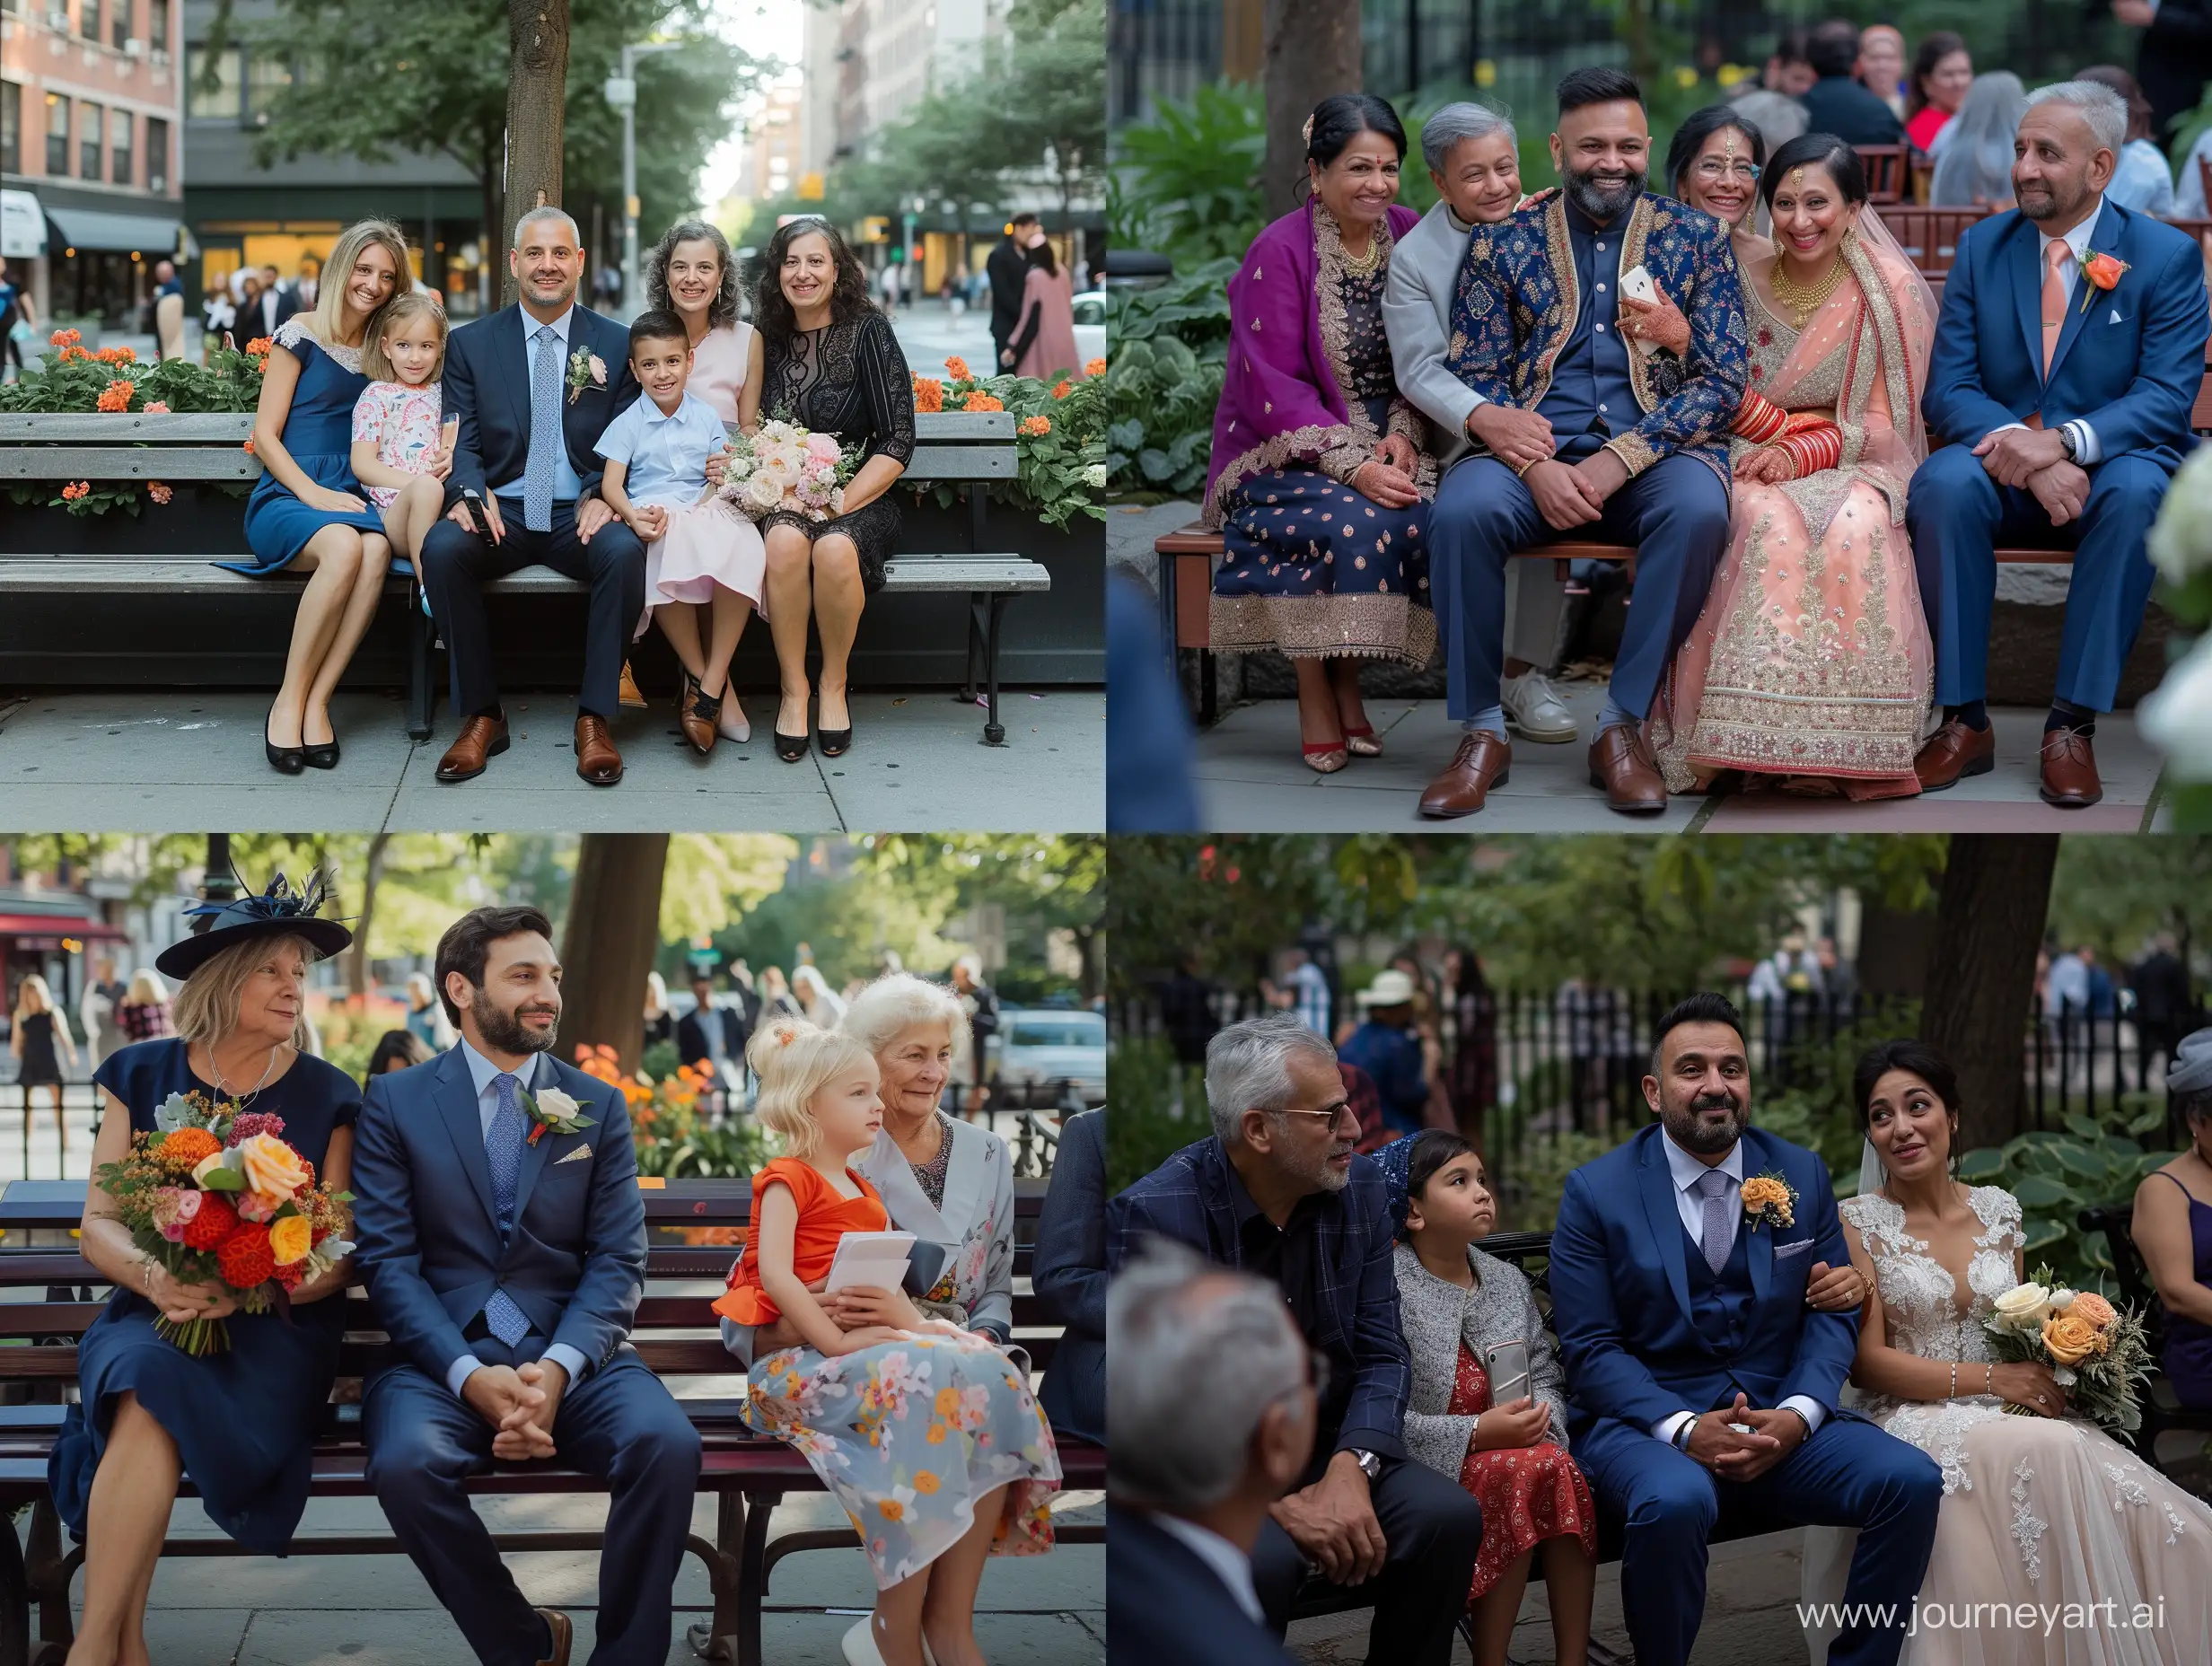 Joyful-Family-Celebration-at-New-York-Wedding-Candid-Moment-Captured-in-2019